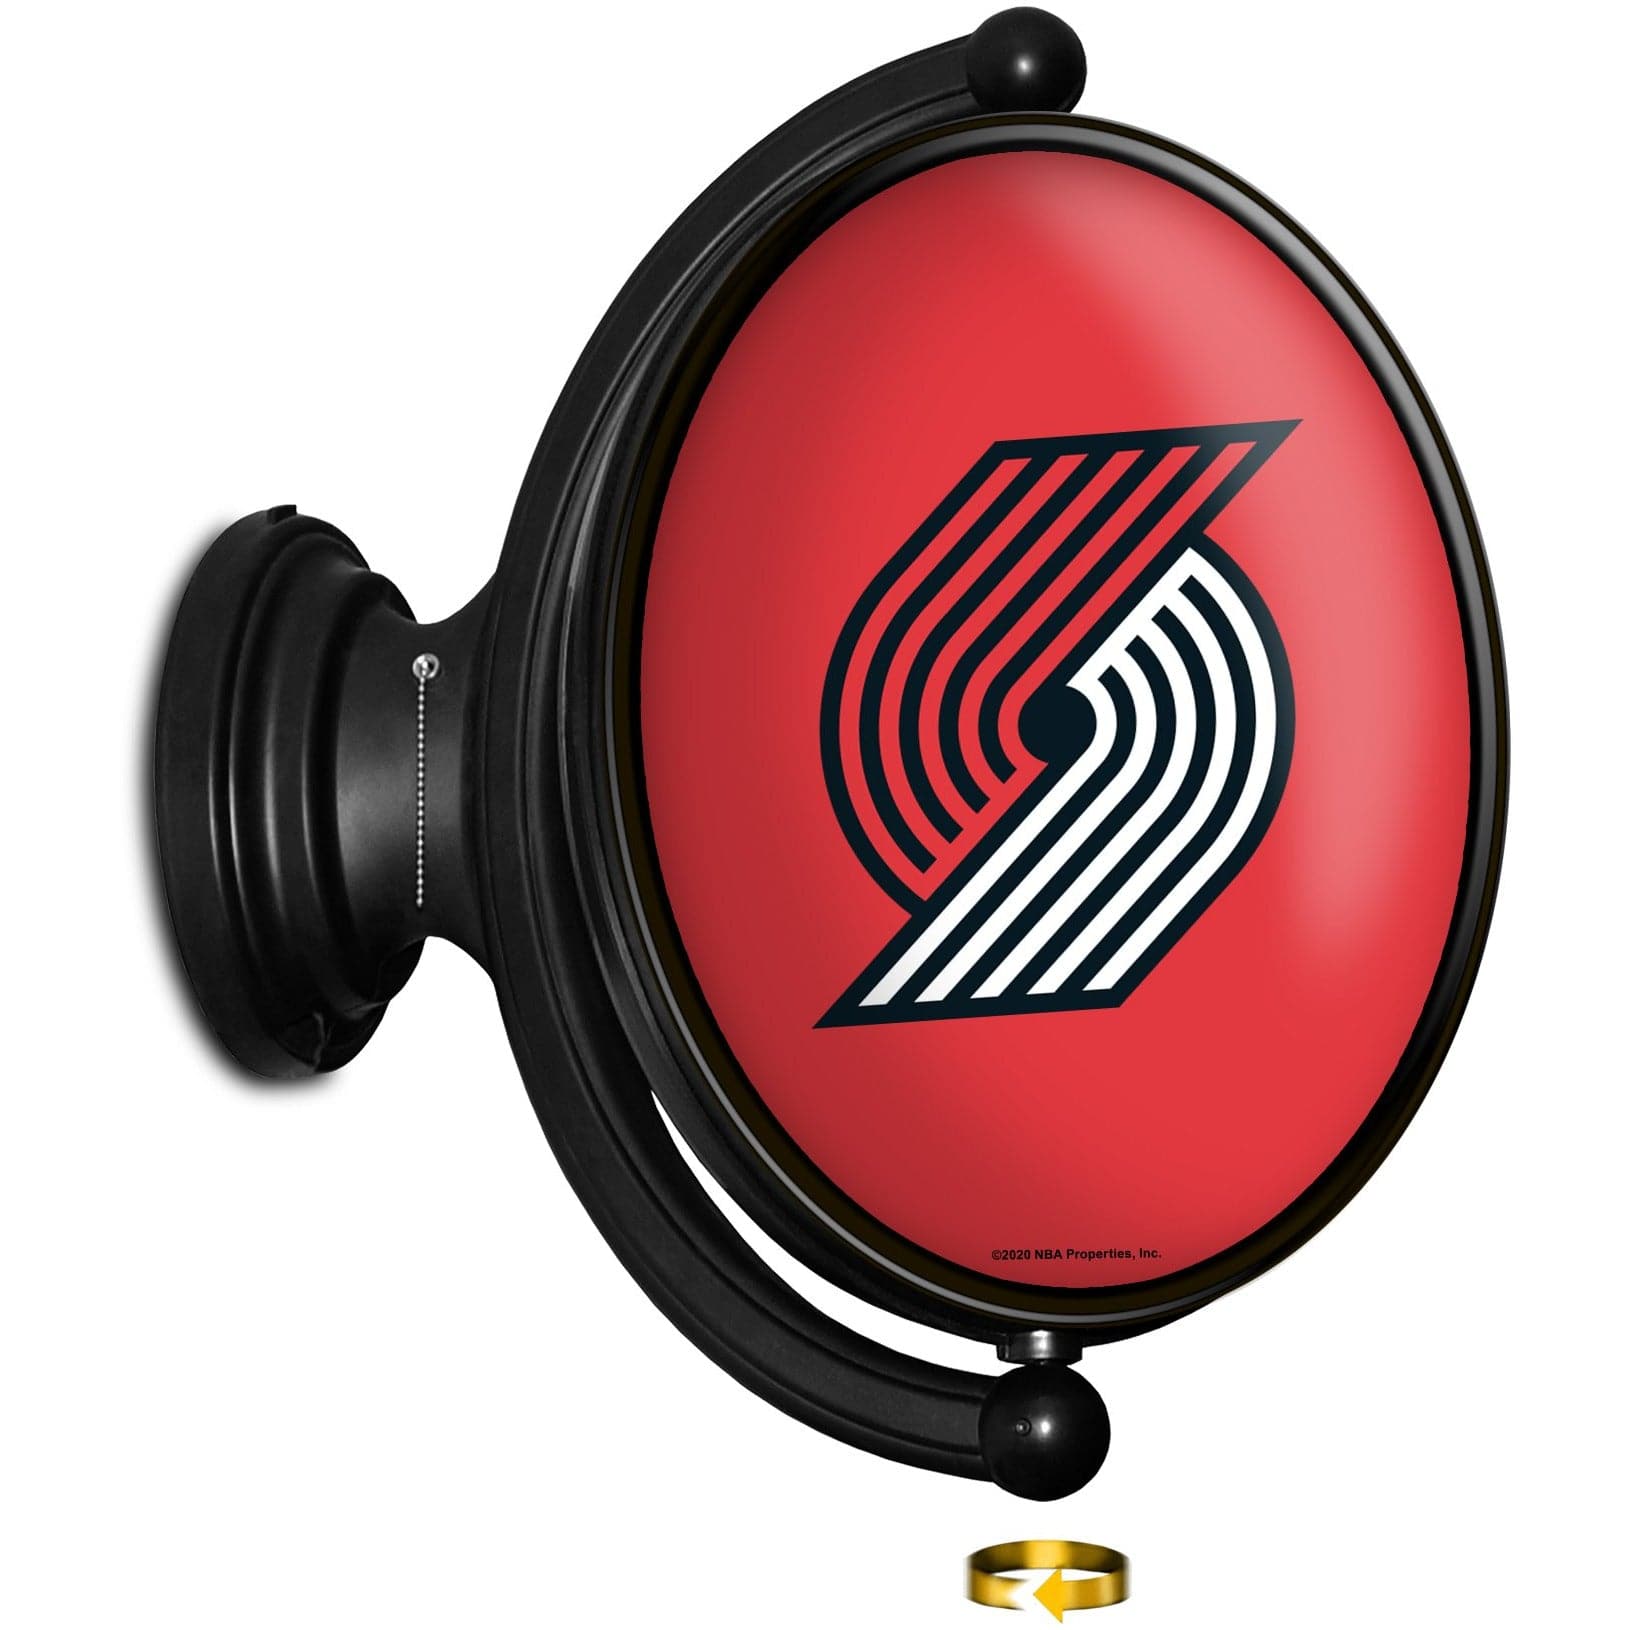 Portland Trail Blazers: Original Oval Rotating Lighted Wall Sign - The Fan-Brand